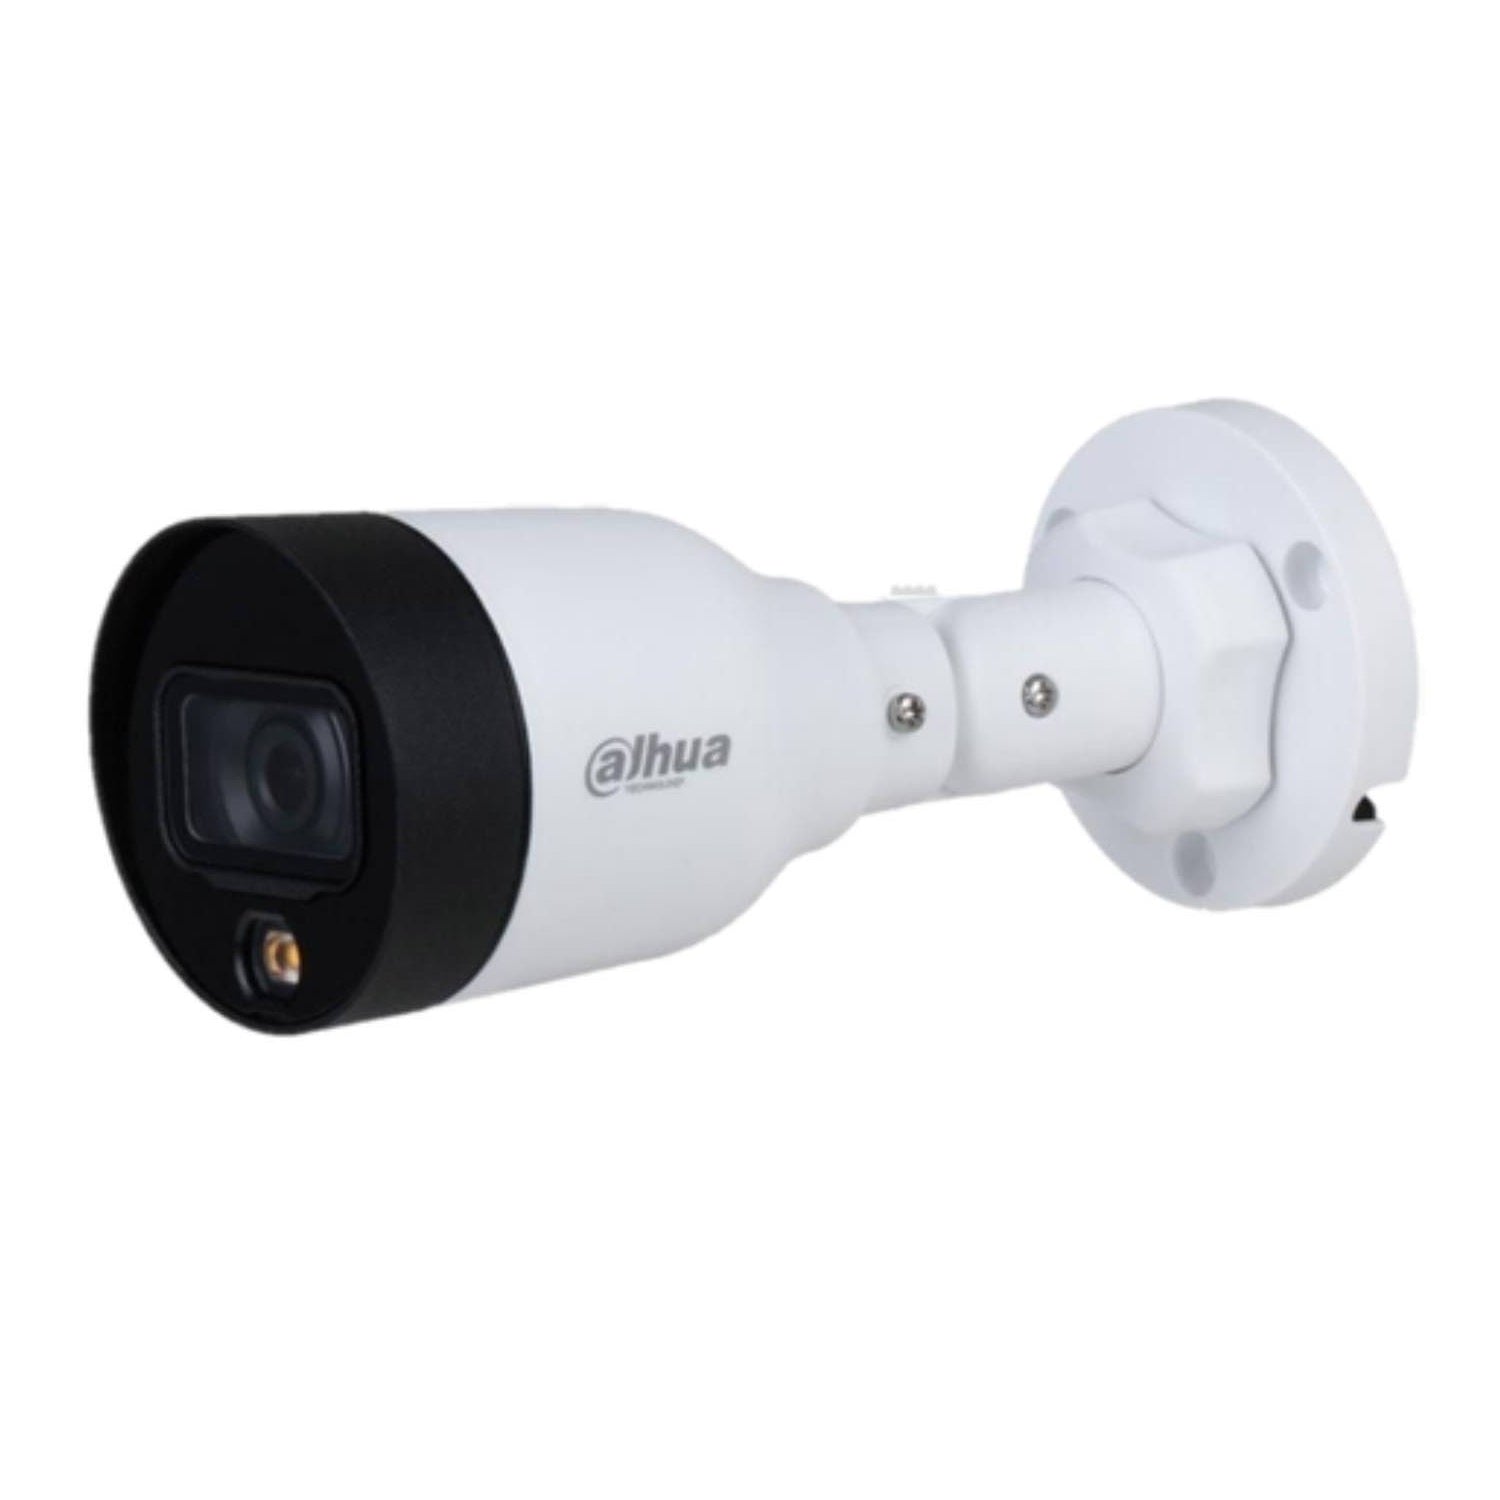 Dahua 2MP IP Bullet Camera DH-IPC-HFW1230S1P-S4